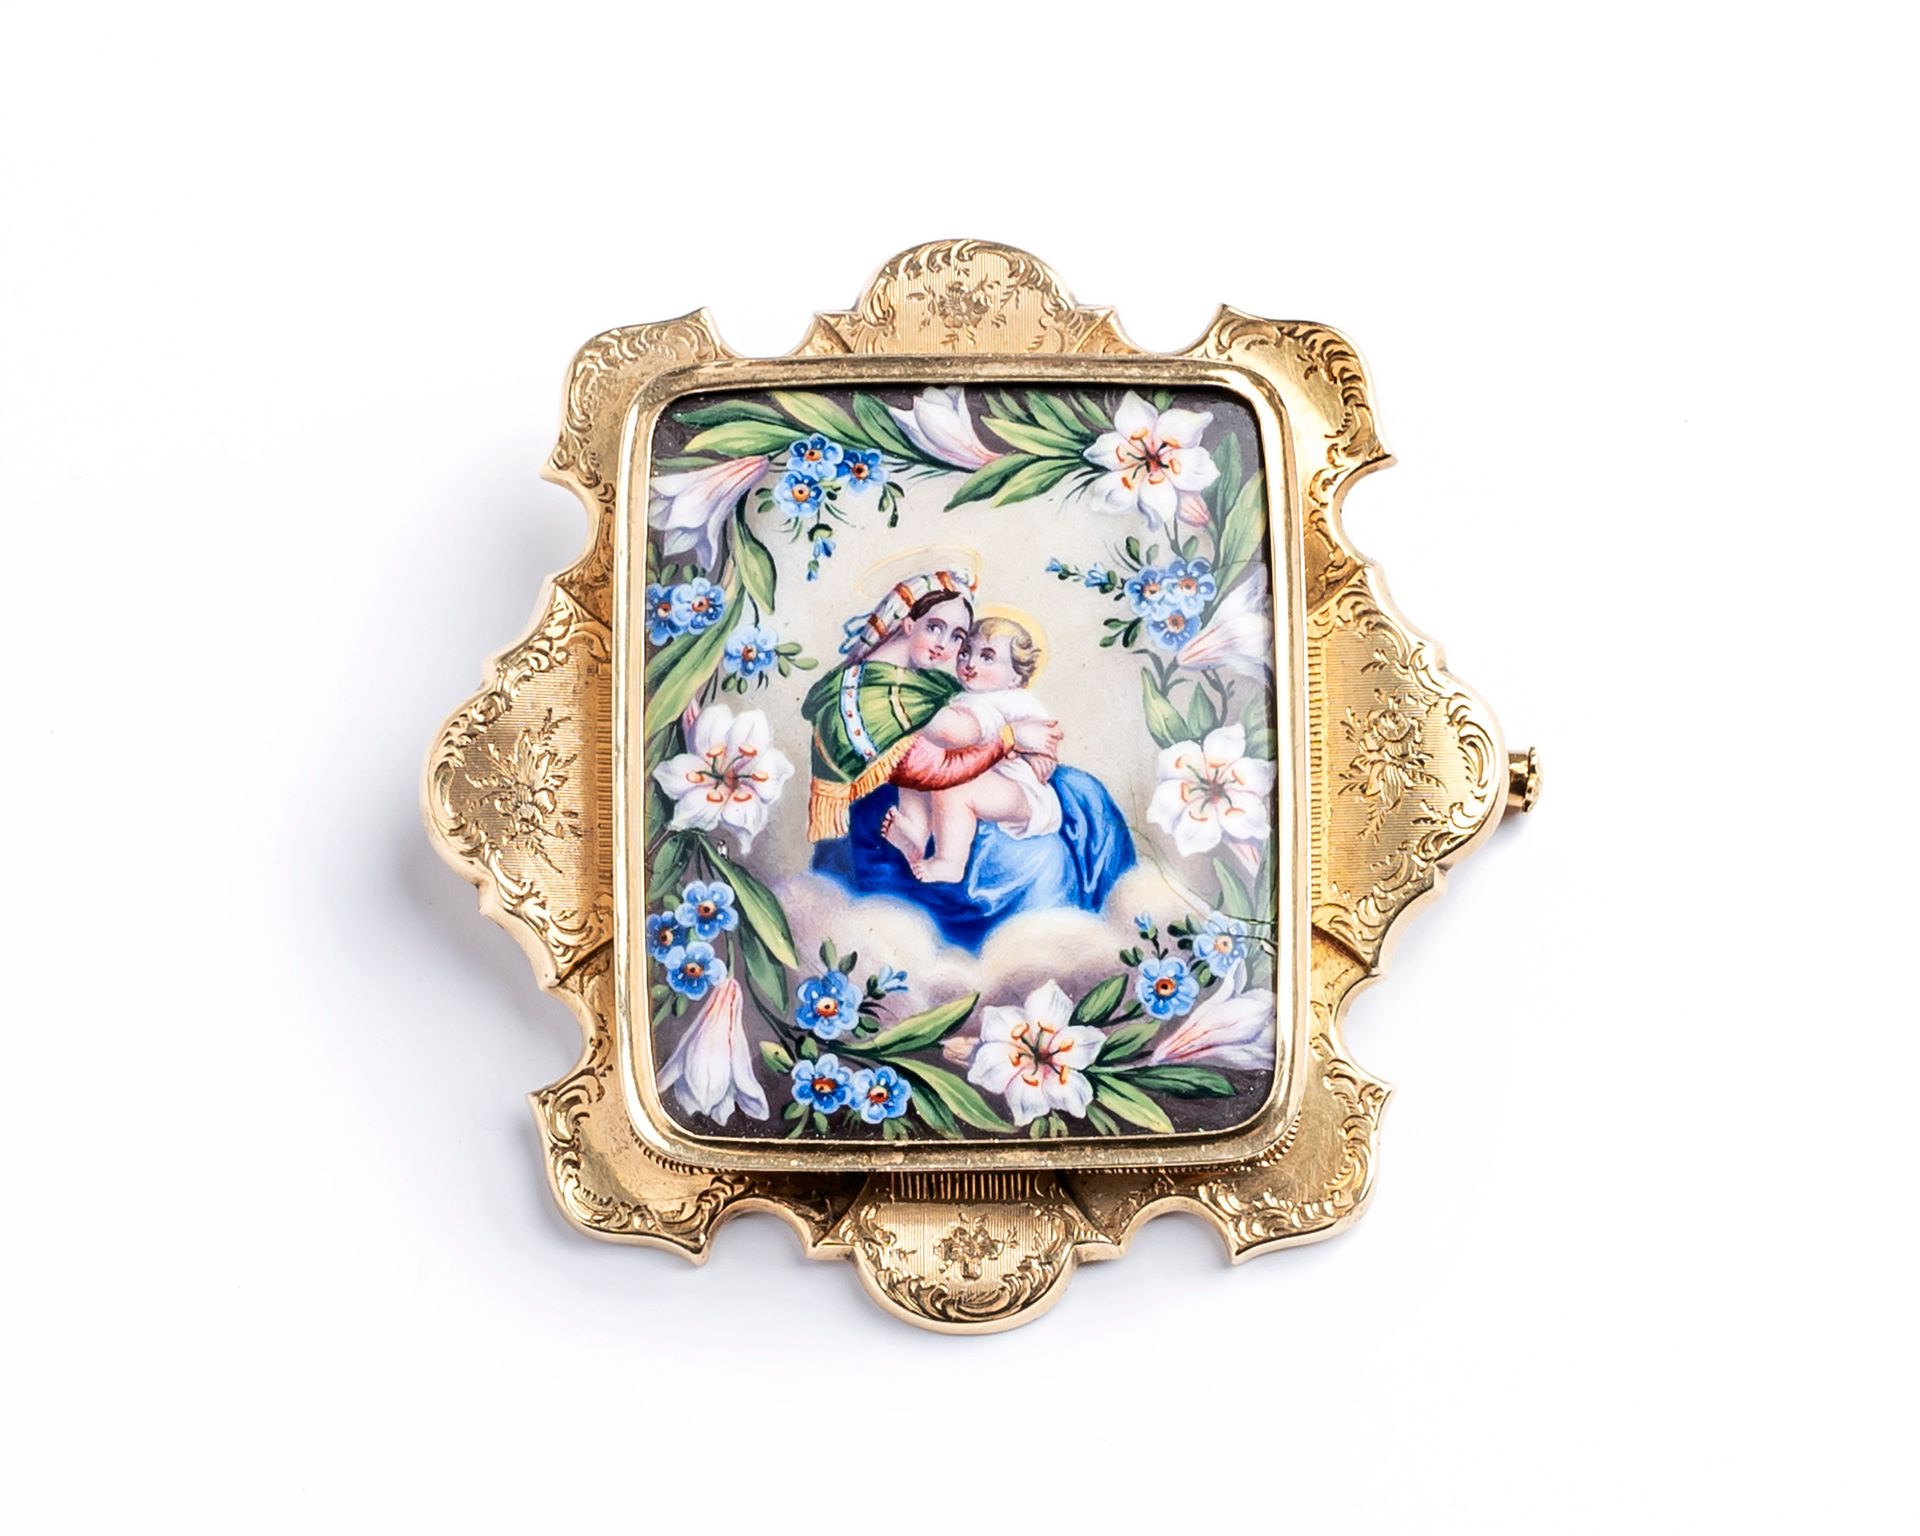 Null 18k（750千分之一）黄金胸针，装饰有描绘拉斐尔之后的圣母和儿童的珐琅小品，在一个精雕细琢的花叶框架中。
19世纪的法国作品
尺寸：5,2 x 5,&hellip;